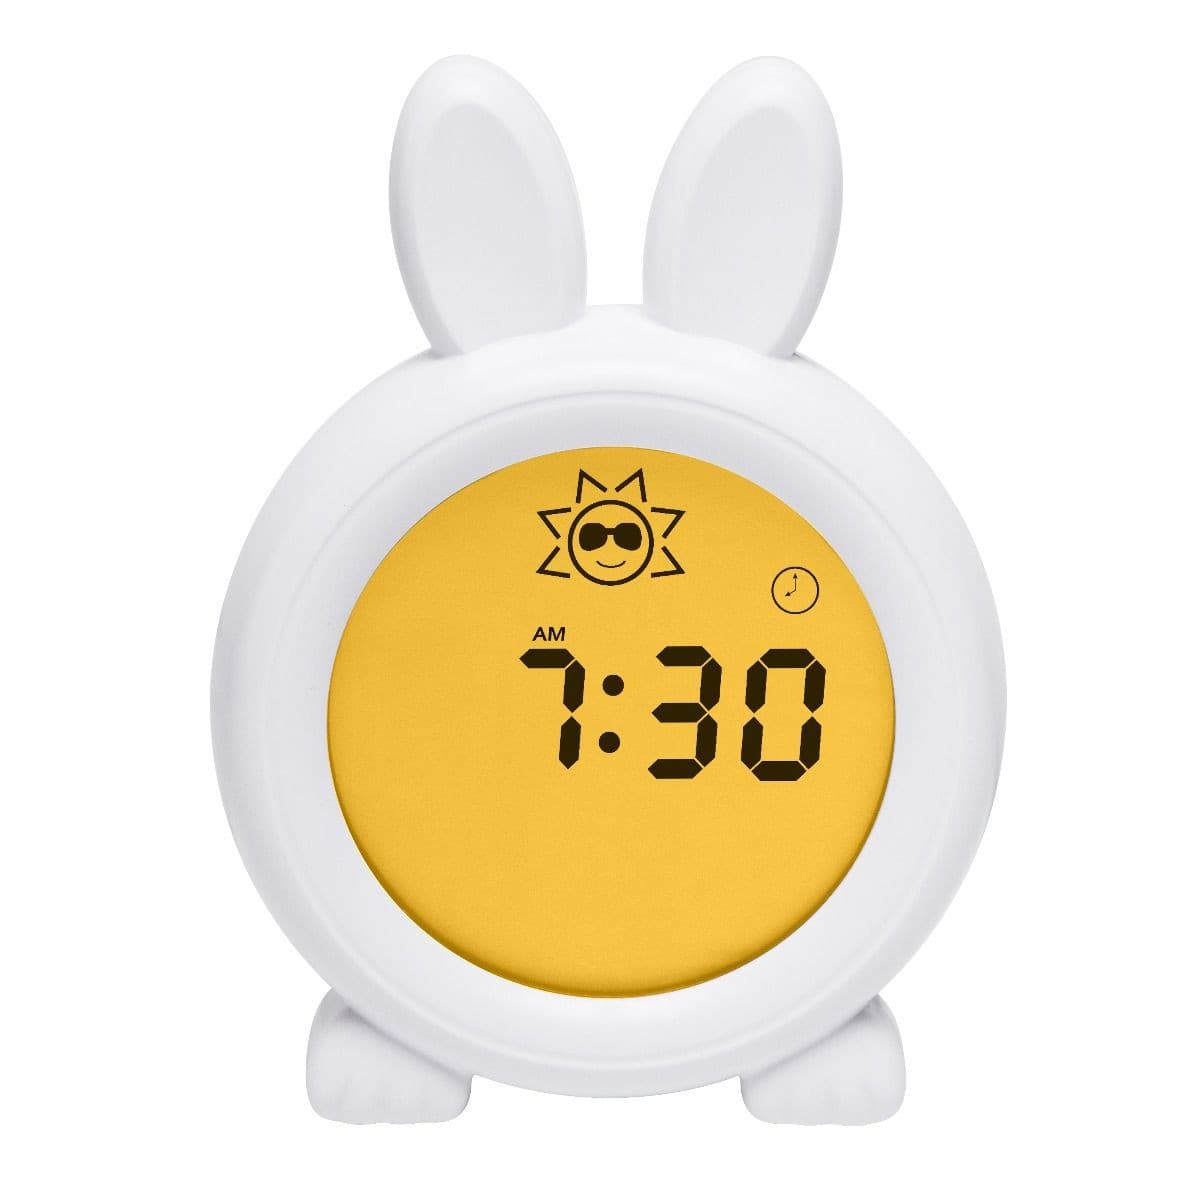 Oricom Sleep Trainer Digital Bunny Clock.